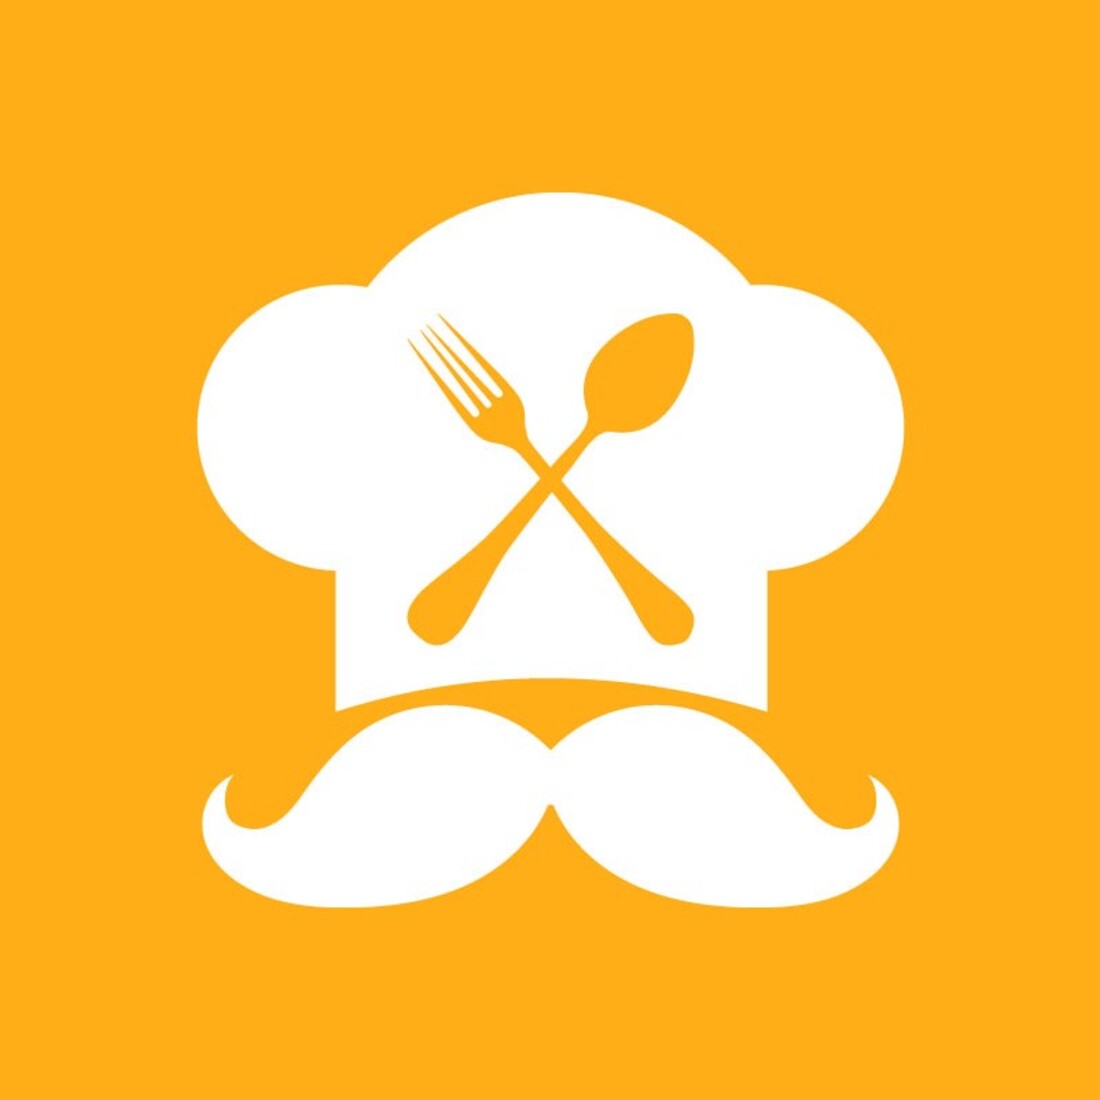 Chef Restaurant Logo Design facebook image.